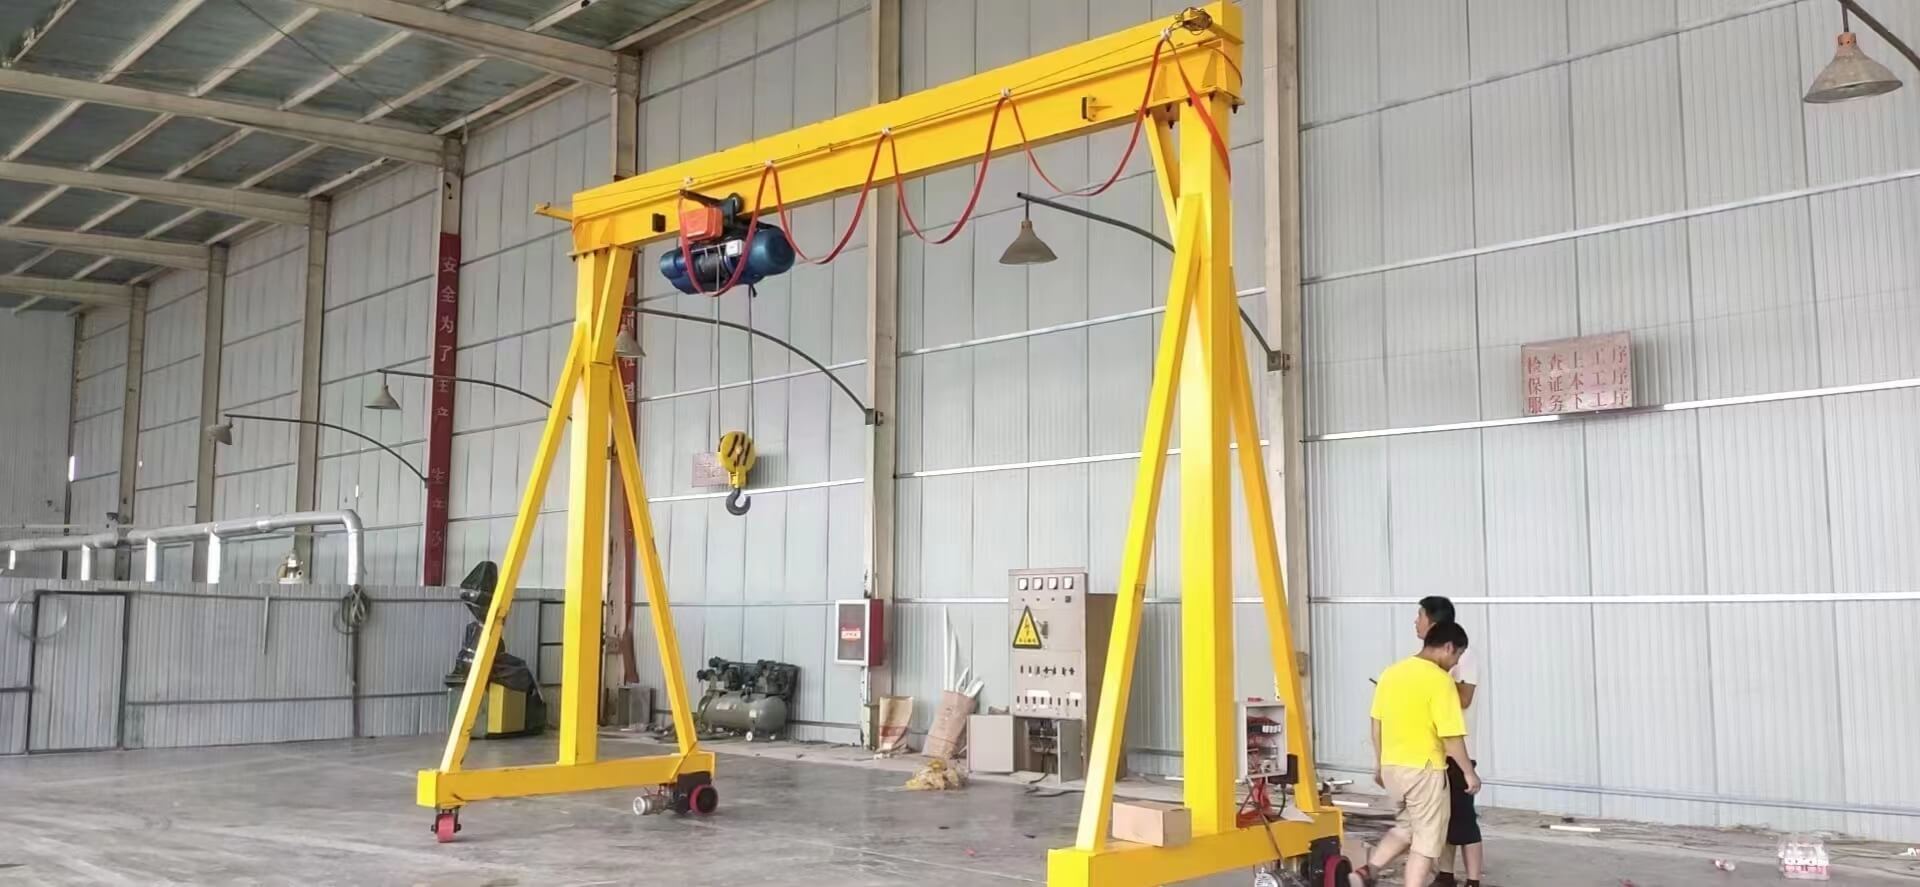 Gantry crane by electric powered-2.jpg